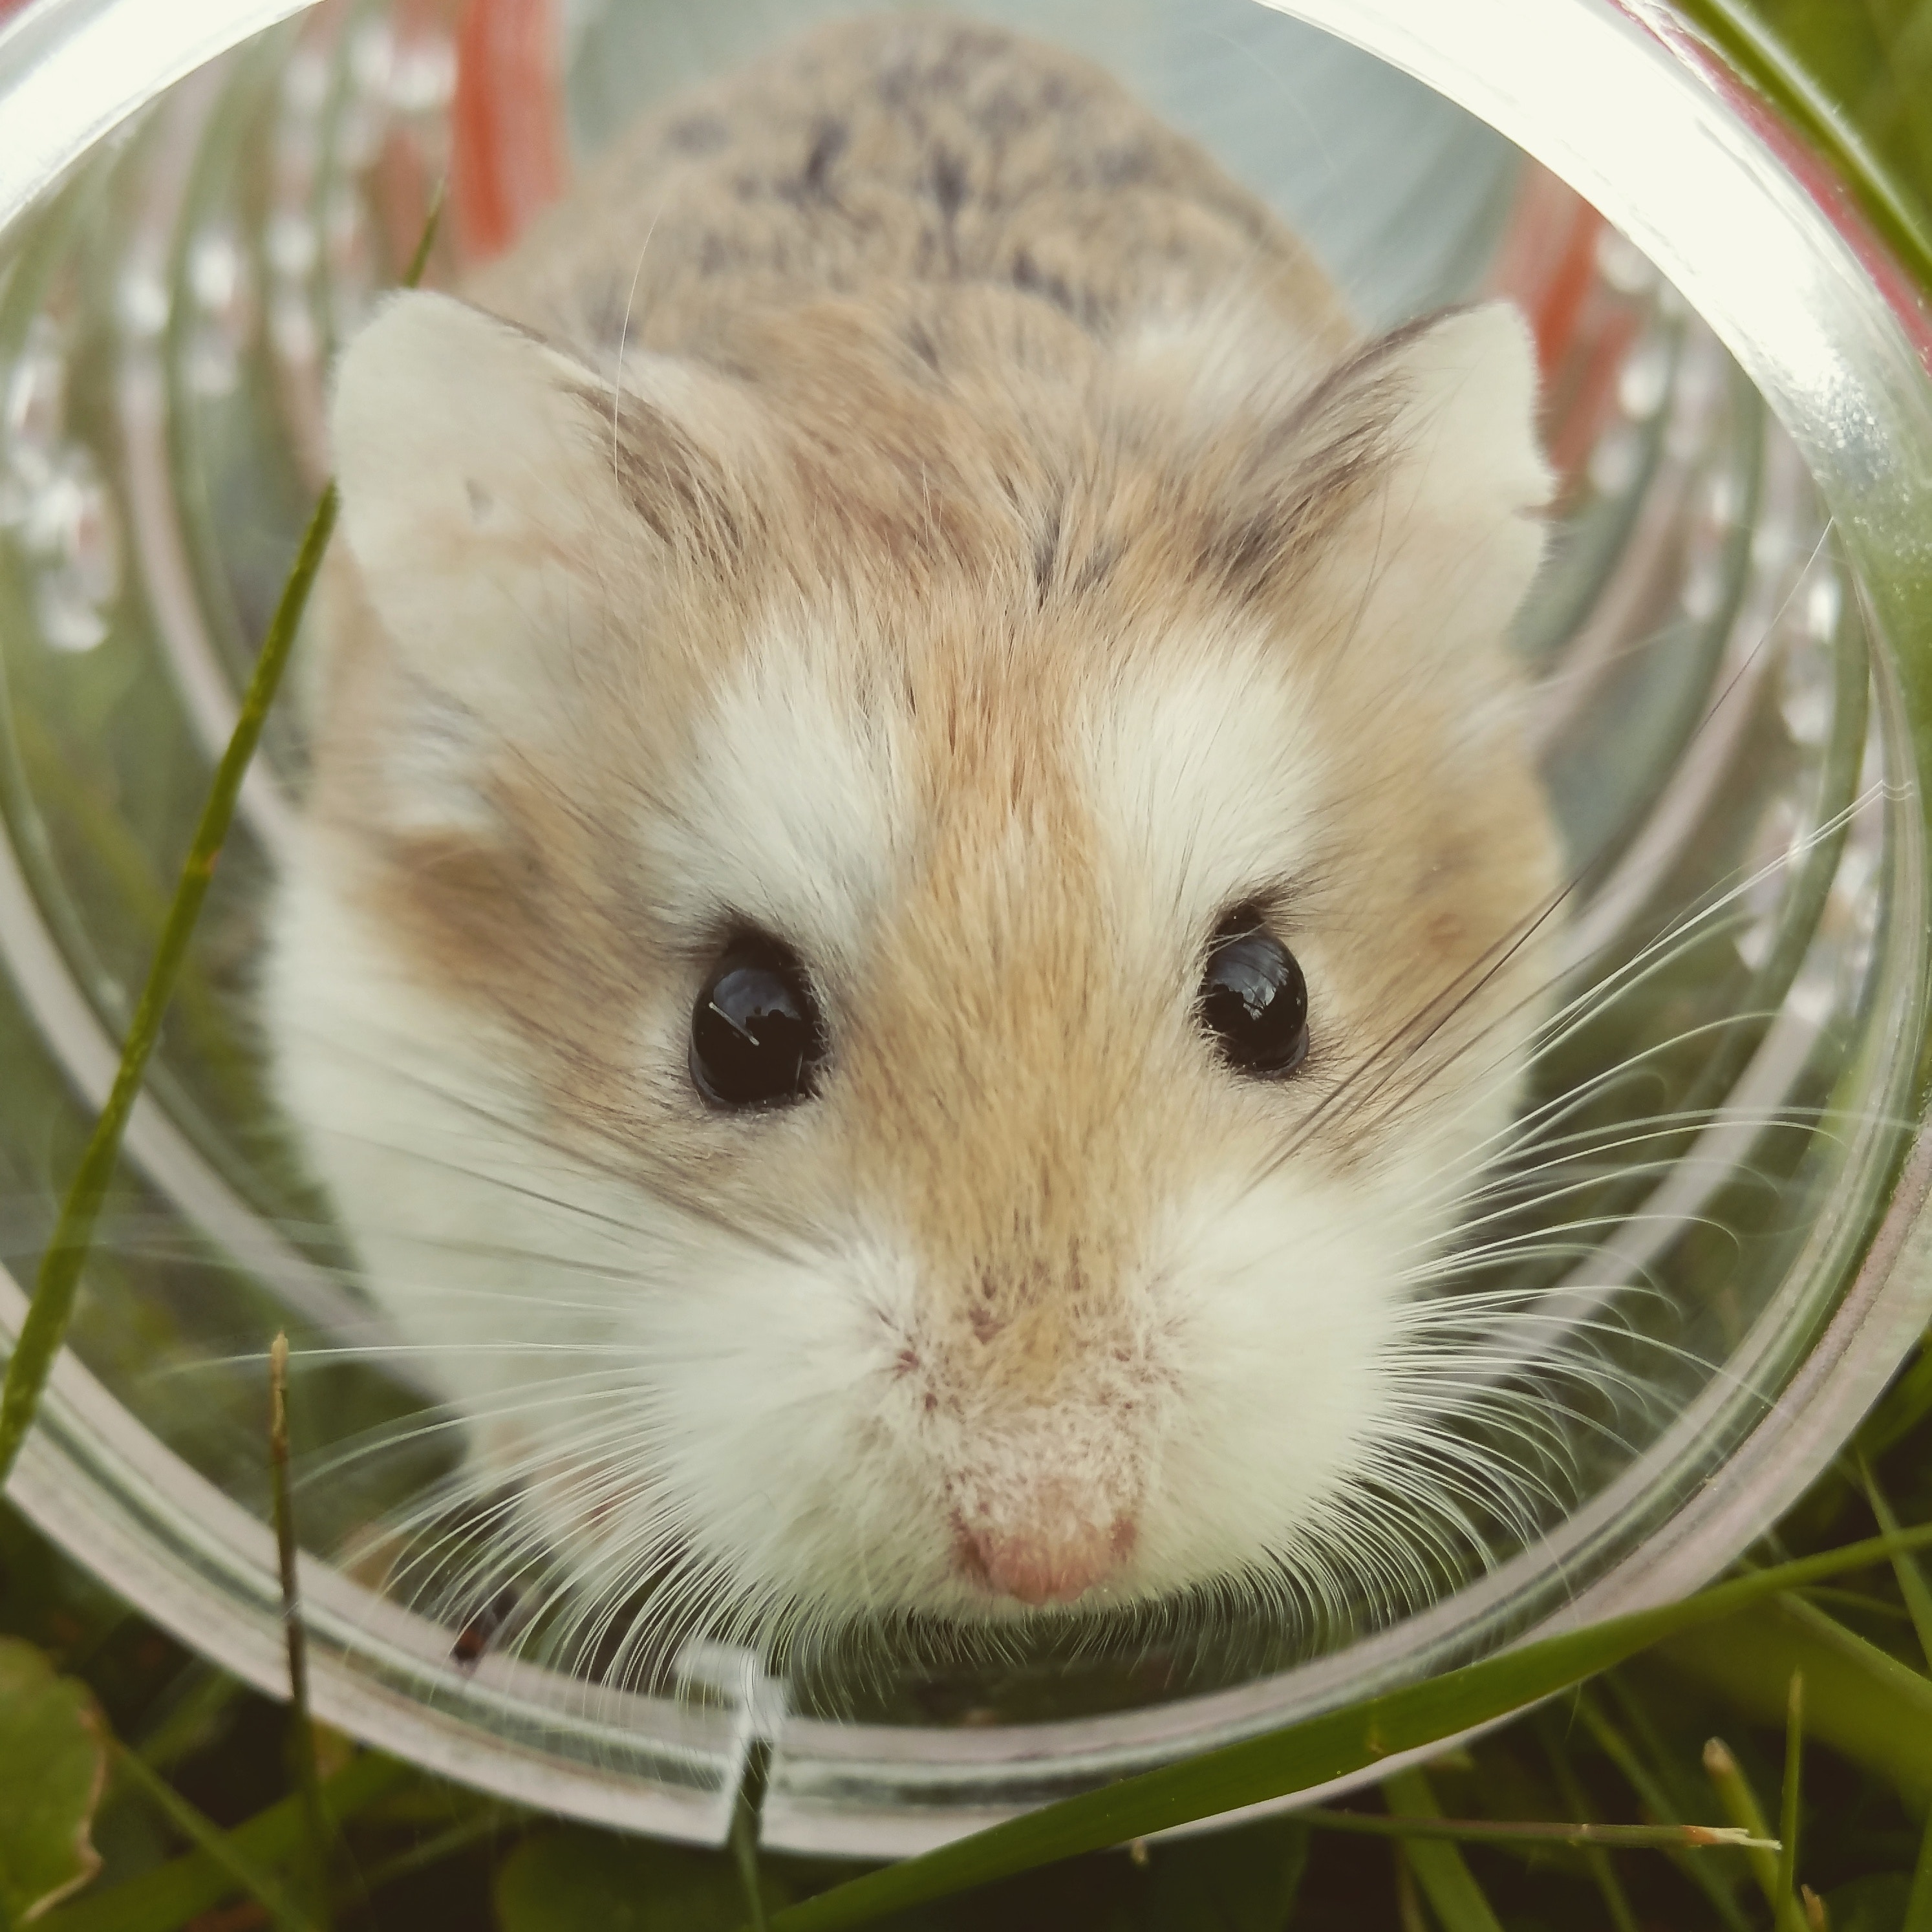 The hamster wheel